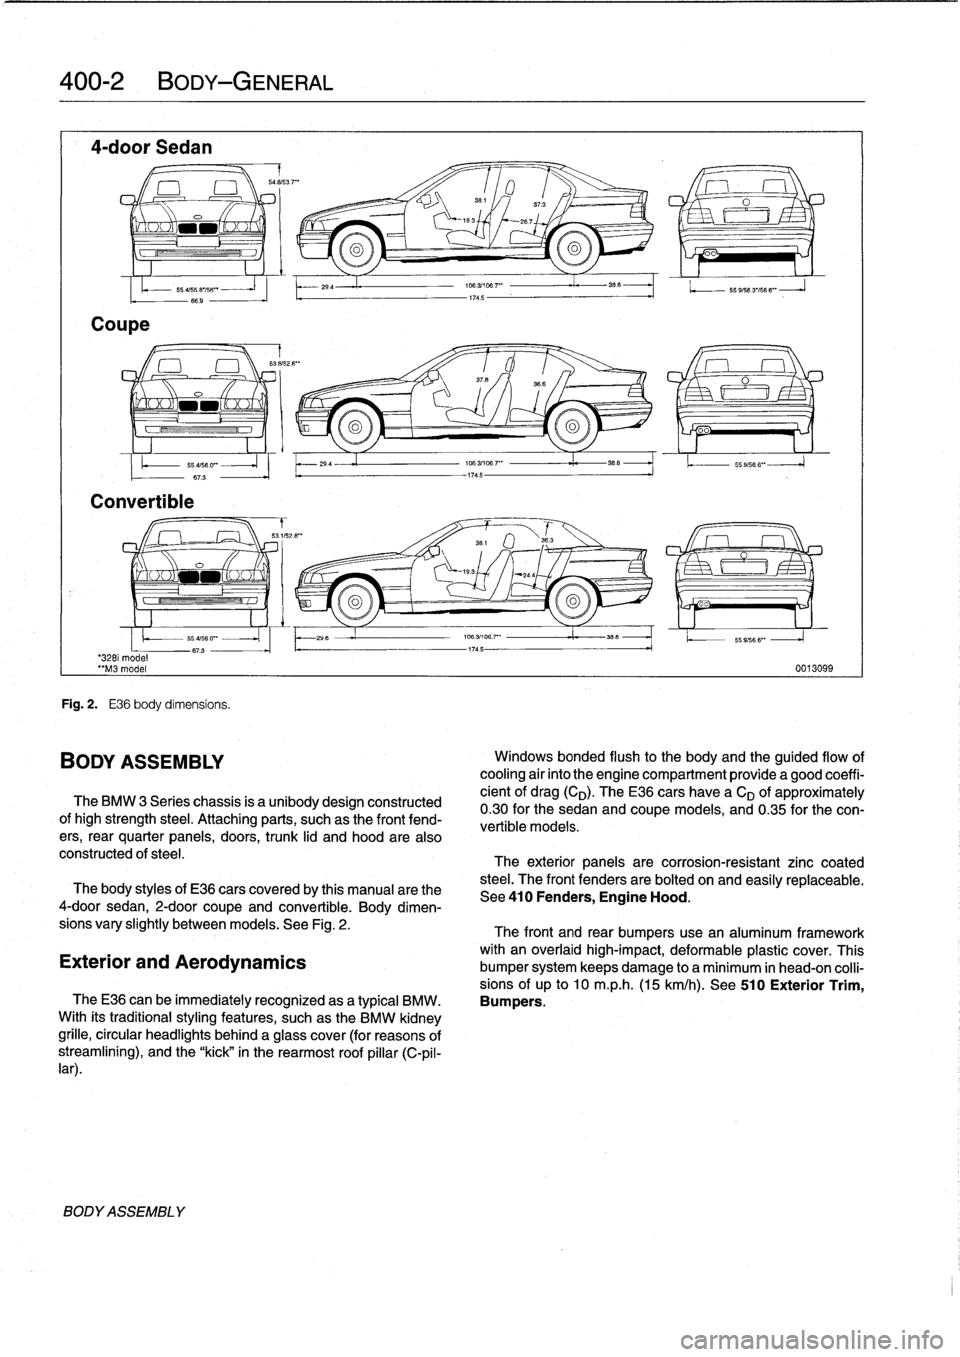 BMW M3 1996 E36 Workshop Manual 
400-2
BODY-GENERAL

4-door
Sedan

Coupe

-
saas3
.7""

351
/

	

37
.3
O

	

I
x
`-193

	

267

o
oa

3281
model
"M3
model

Convertible

BODYASSEMBLY

55
ass
.e
iss
""
-
66
.9
-

Fig
.
2
.

	

E36
b